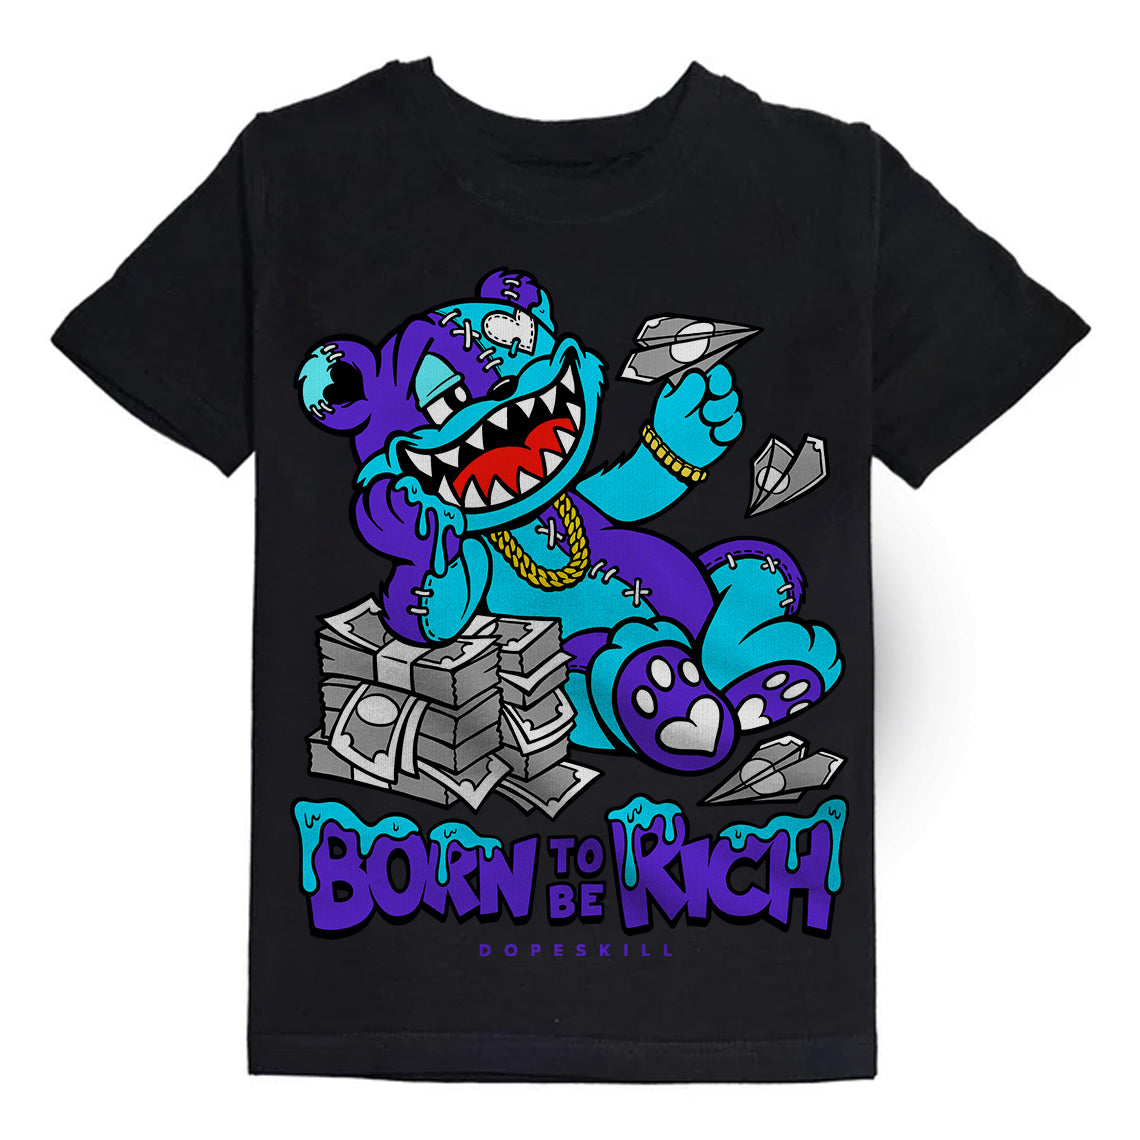 Jordan 6 "Aqua" DopeSkill Toddler Kids T-shirt Born To Be Rich Graphic Streetwear - Black